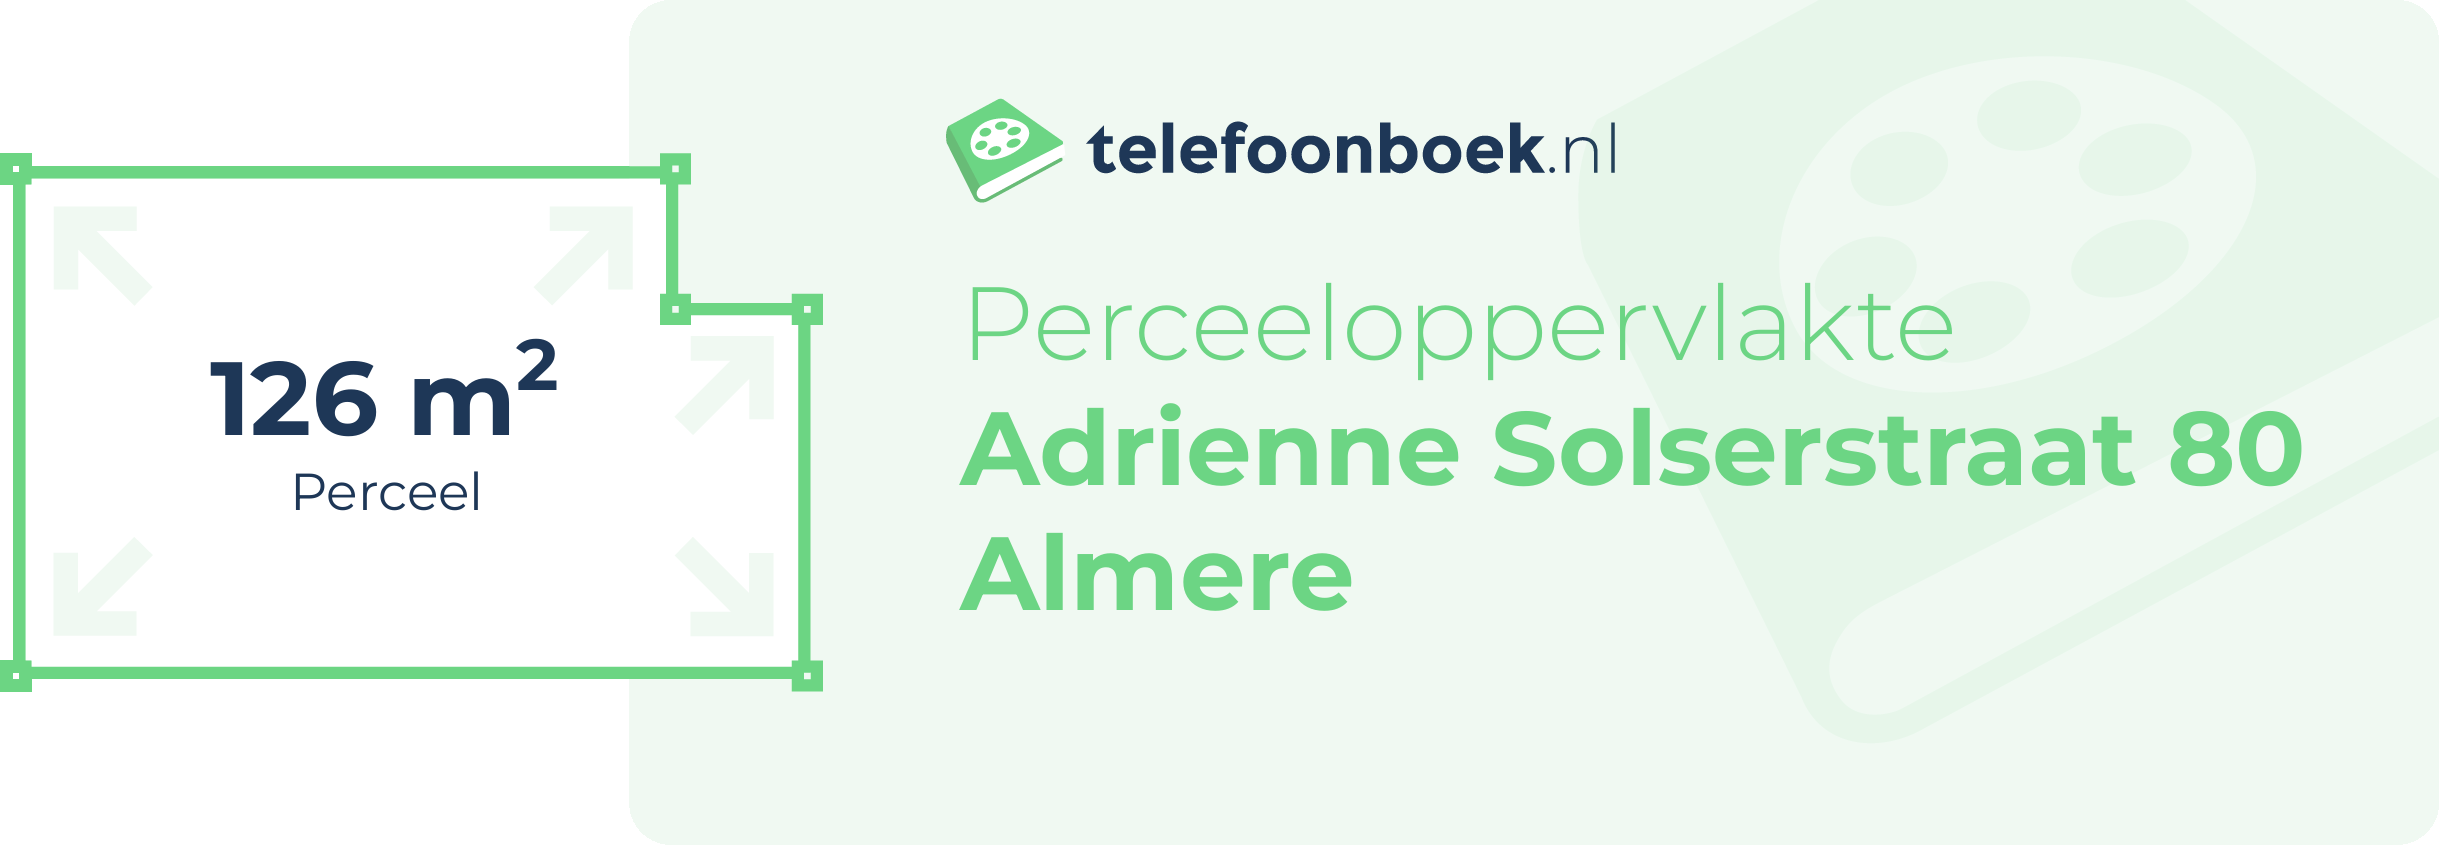 Perceeloppervlakte Adrienne Solserstraat 80 Almere